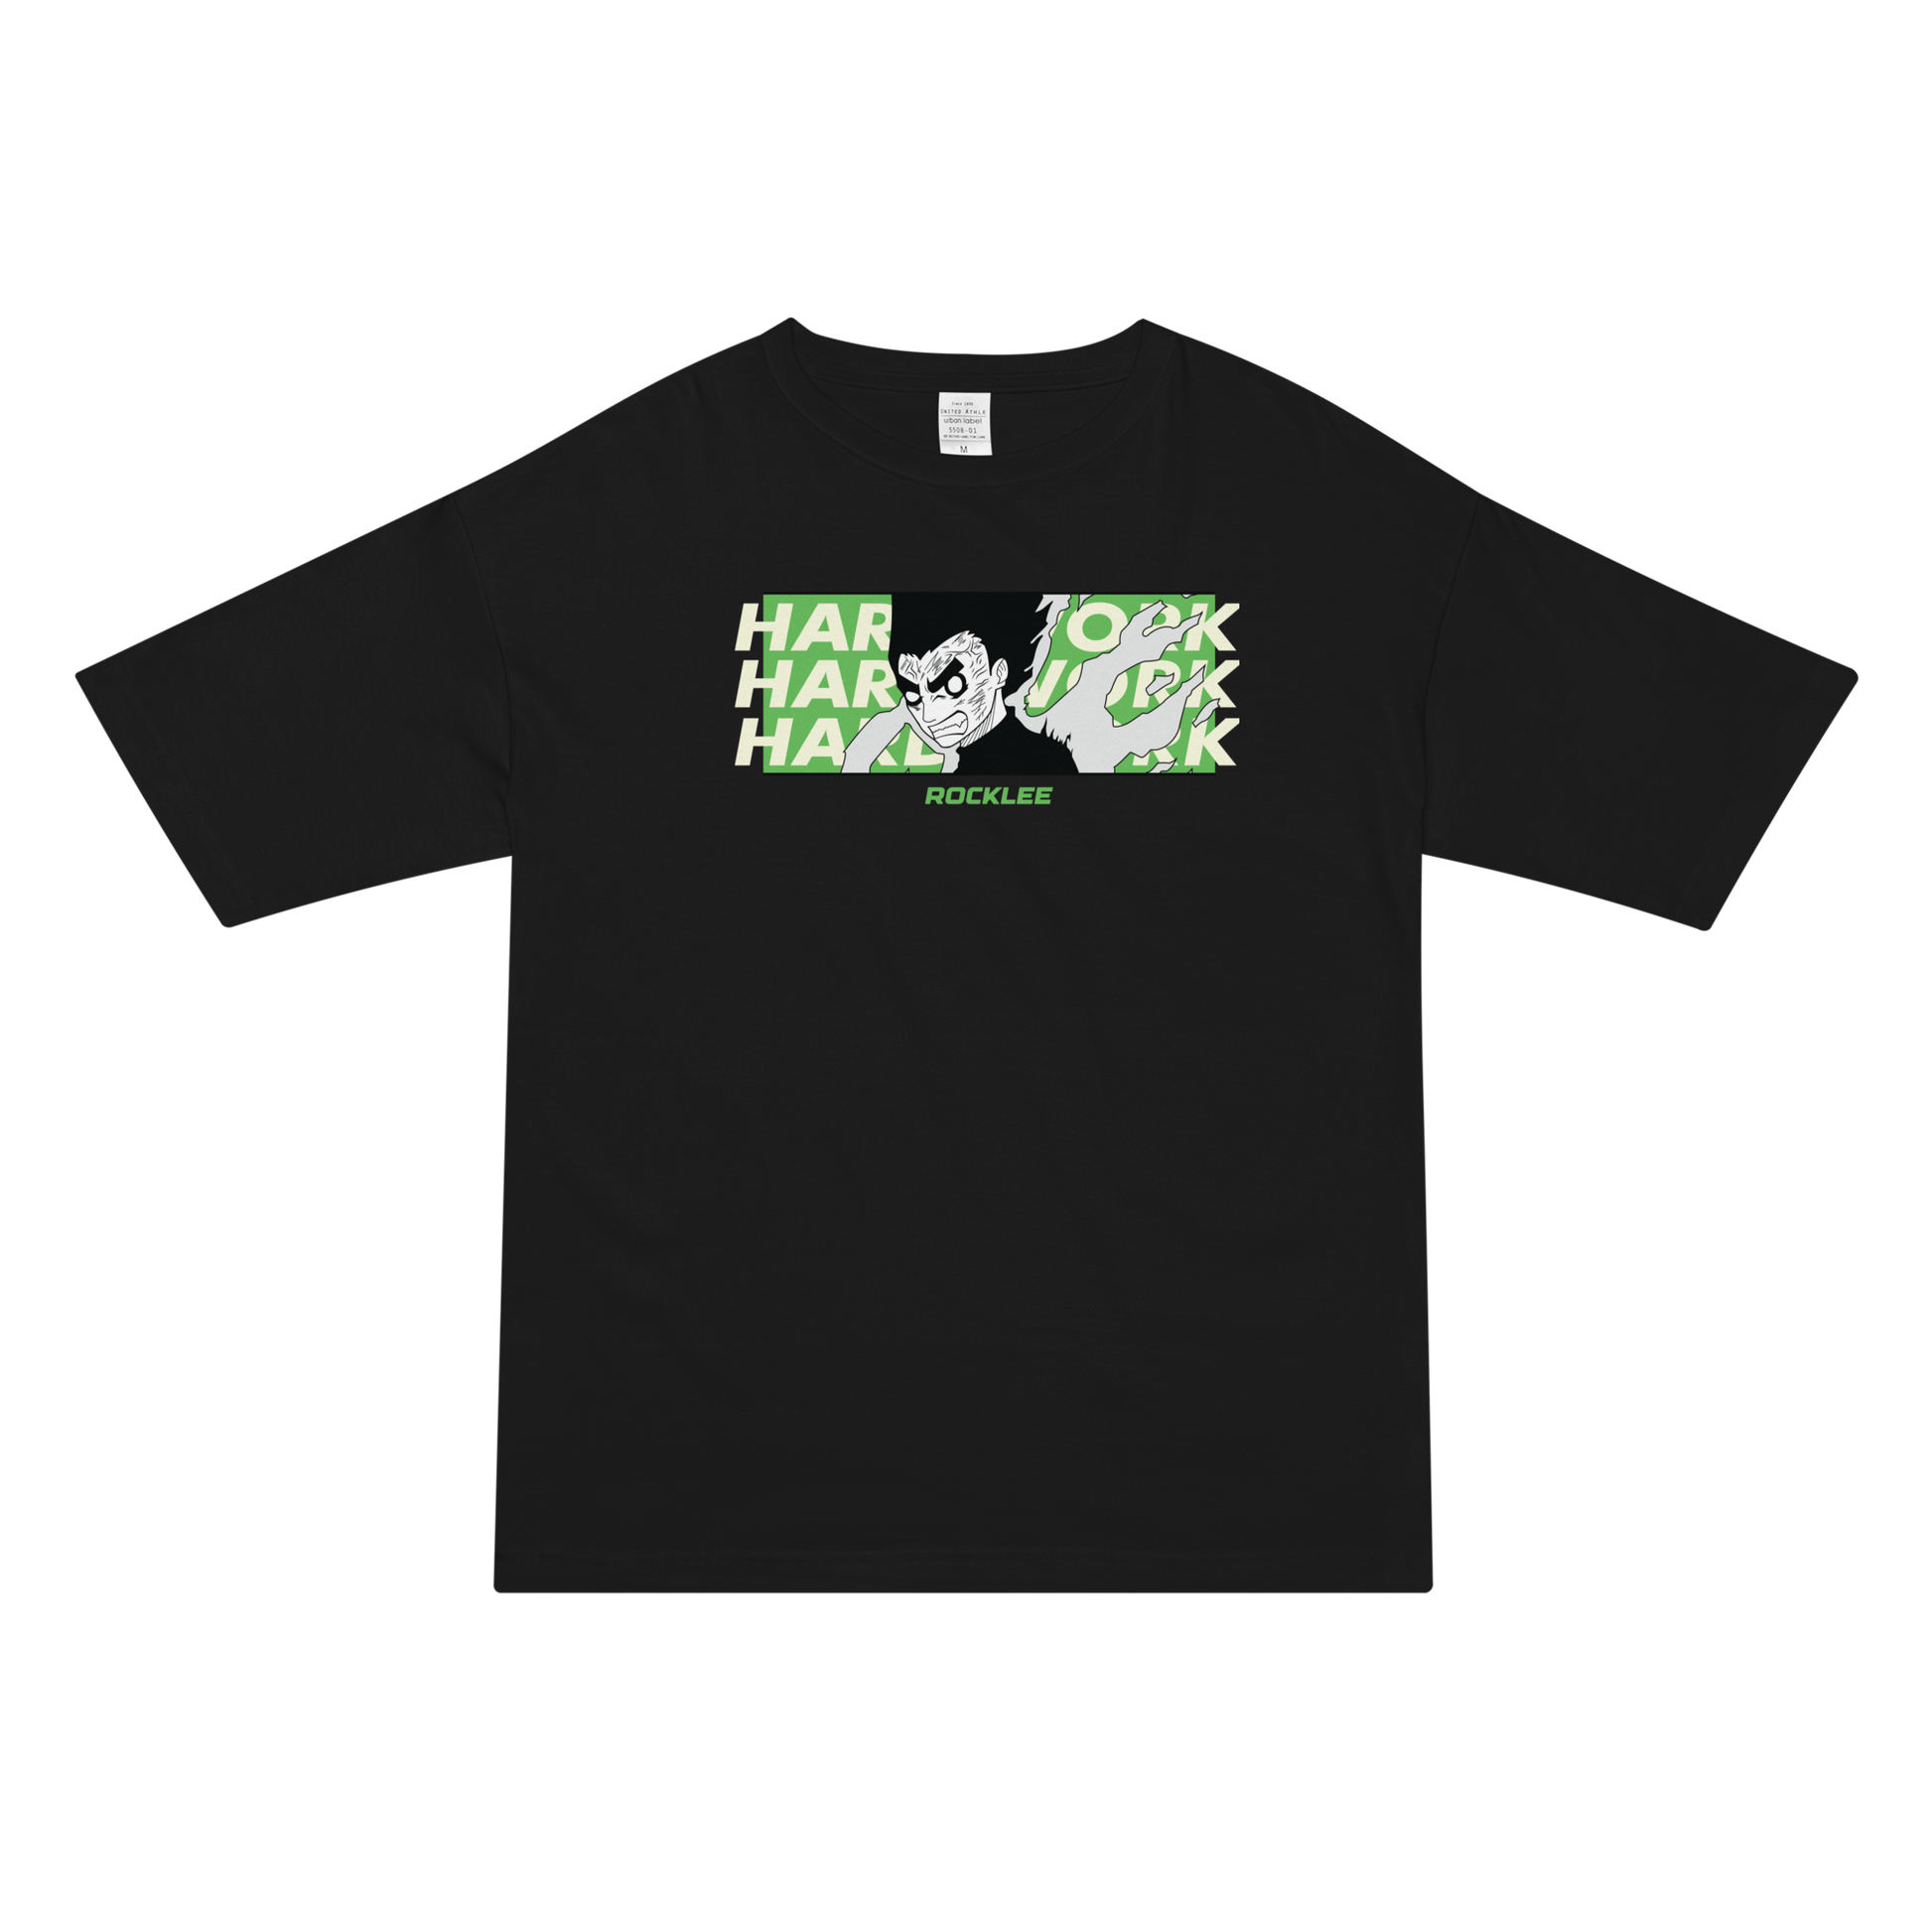 Rock lee t-shirt – Halo Fashionwear